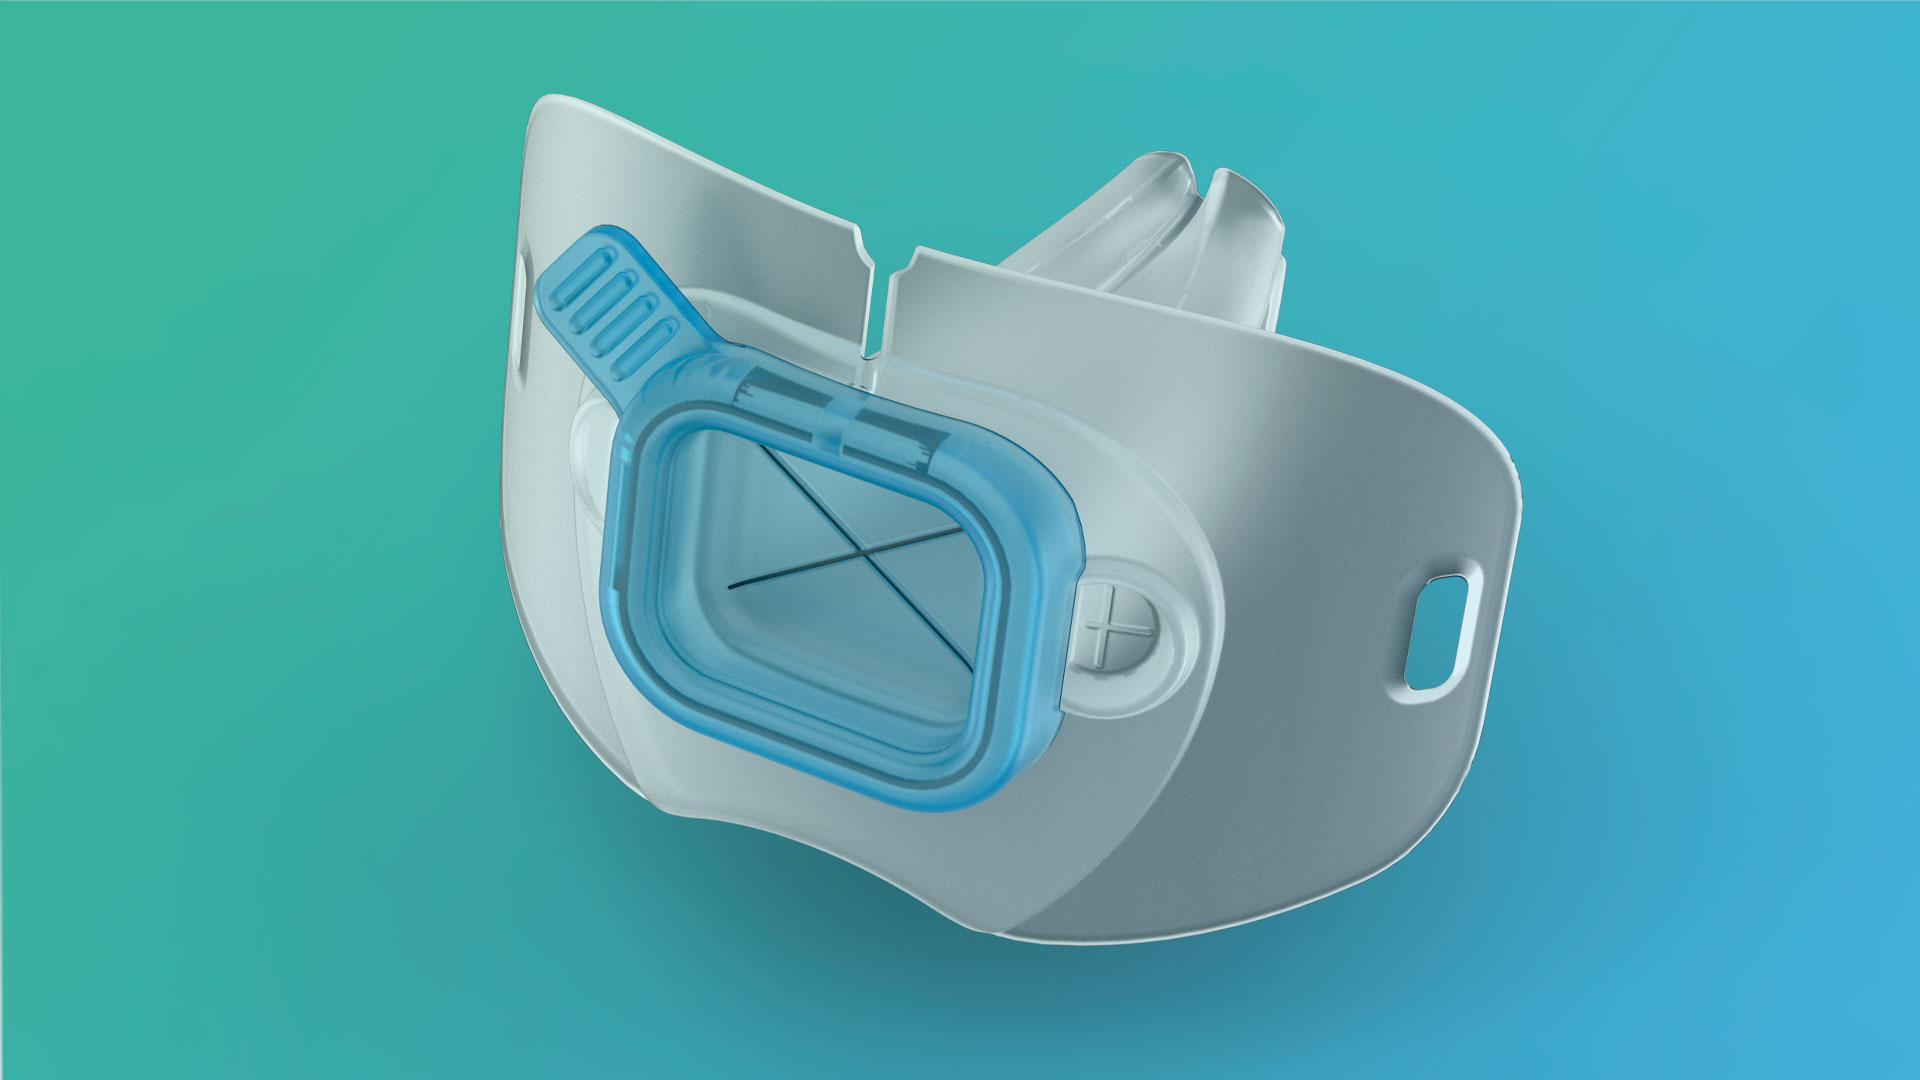 Endotracheal Intubation Device render